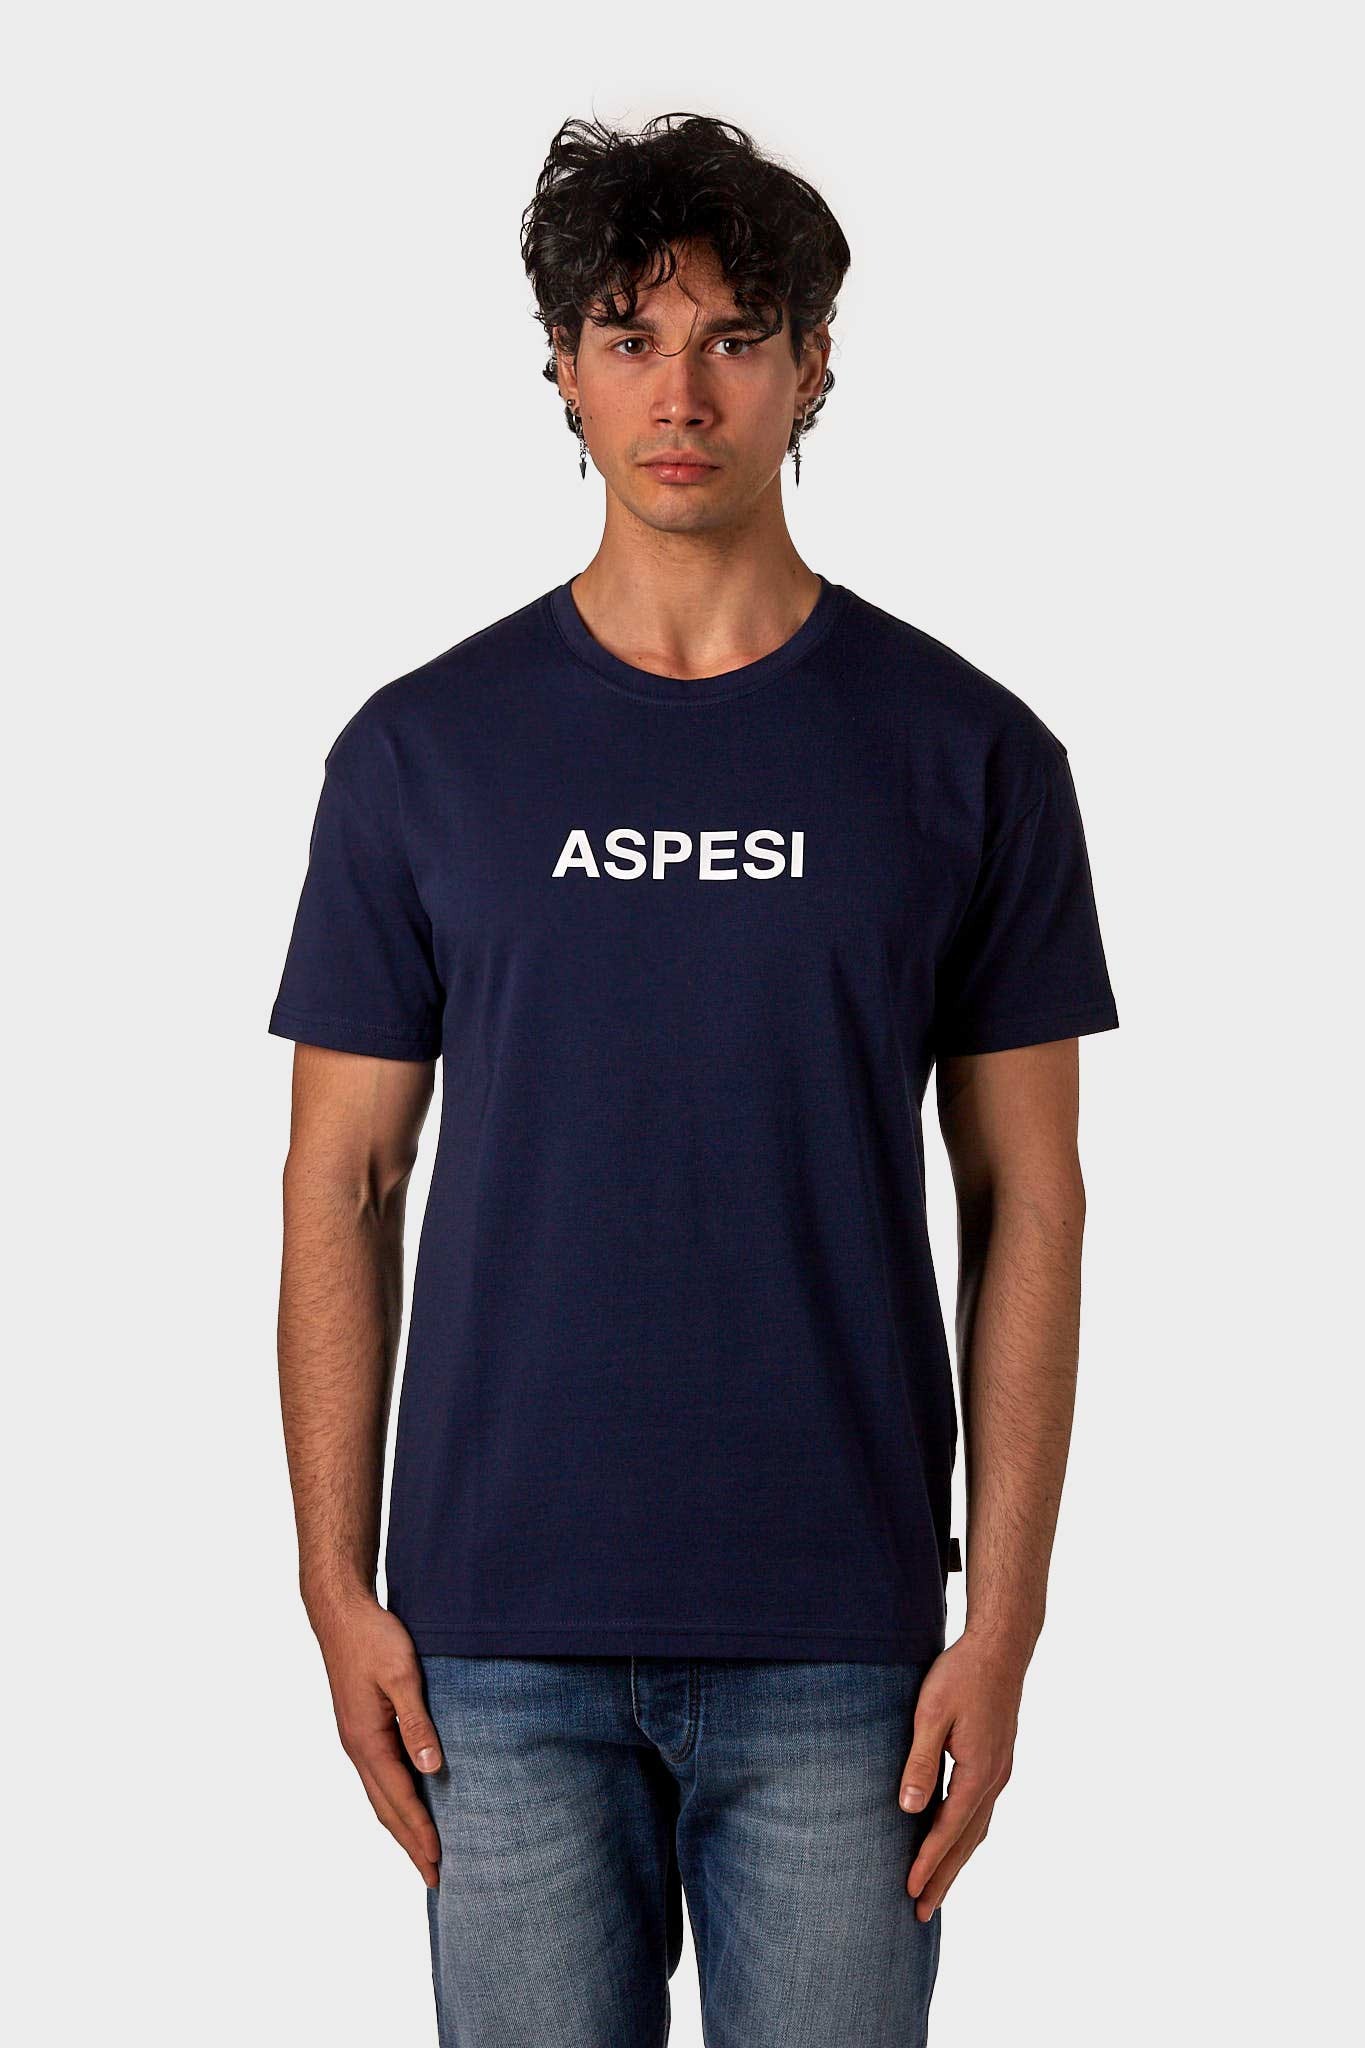 ASPESI T-SHIRT ASP1MTS02 NAVY UOMO